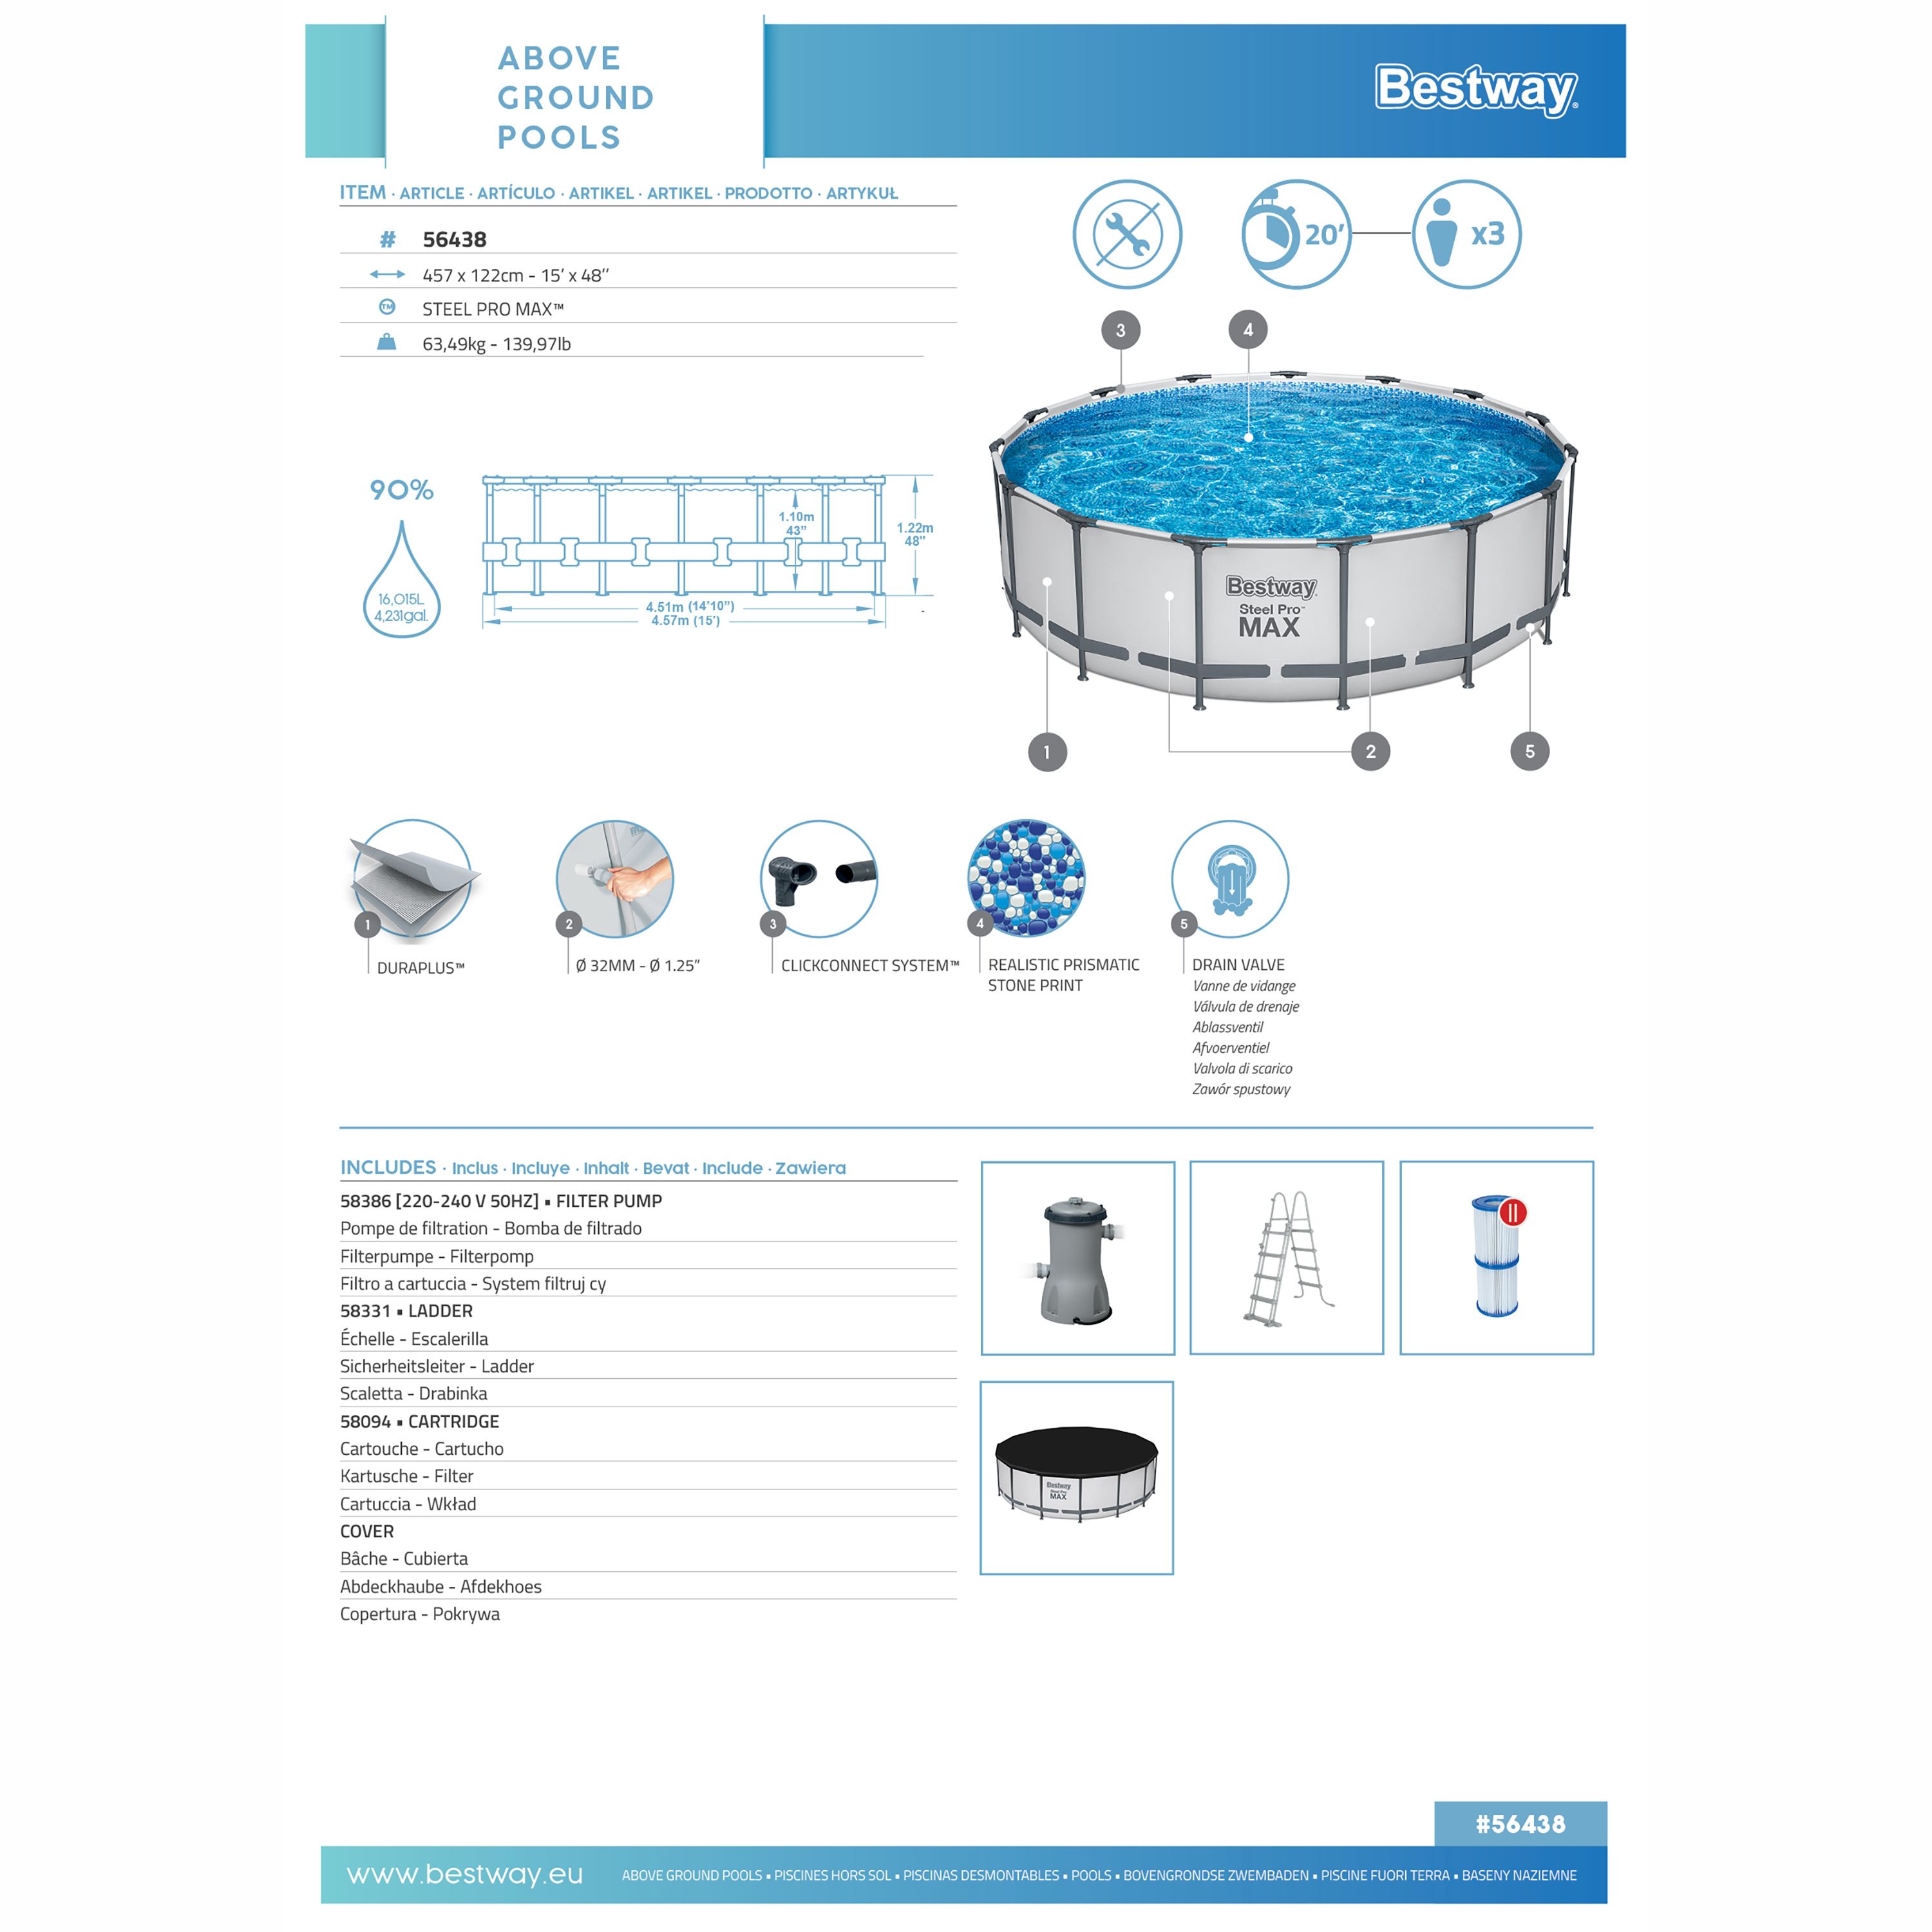 Bestway Steel Pro MAX™ Plain Polyvinyl chloride (PVC) & steel Pool (W) 4.57m x (L) 4.57m